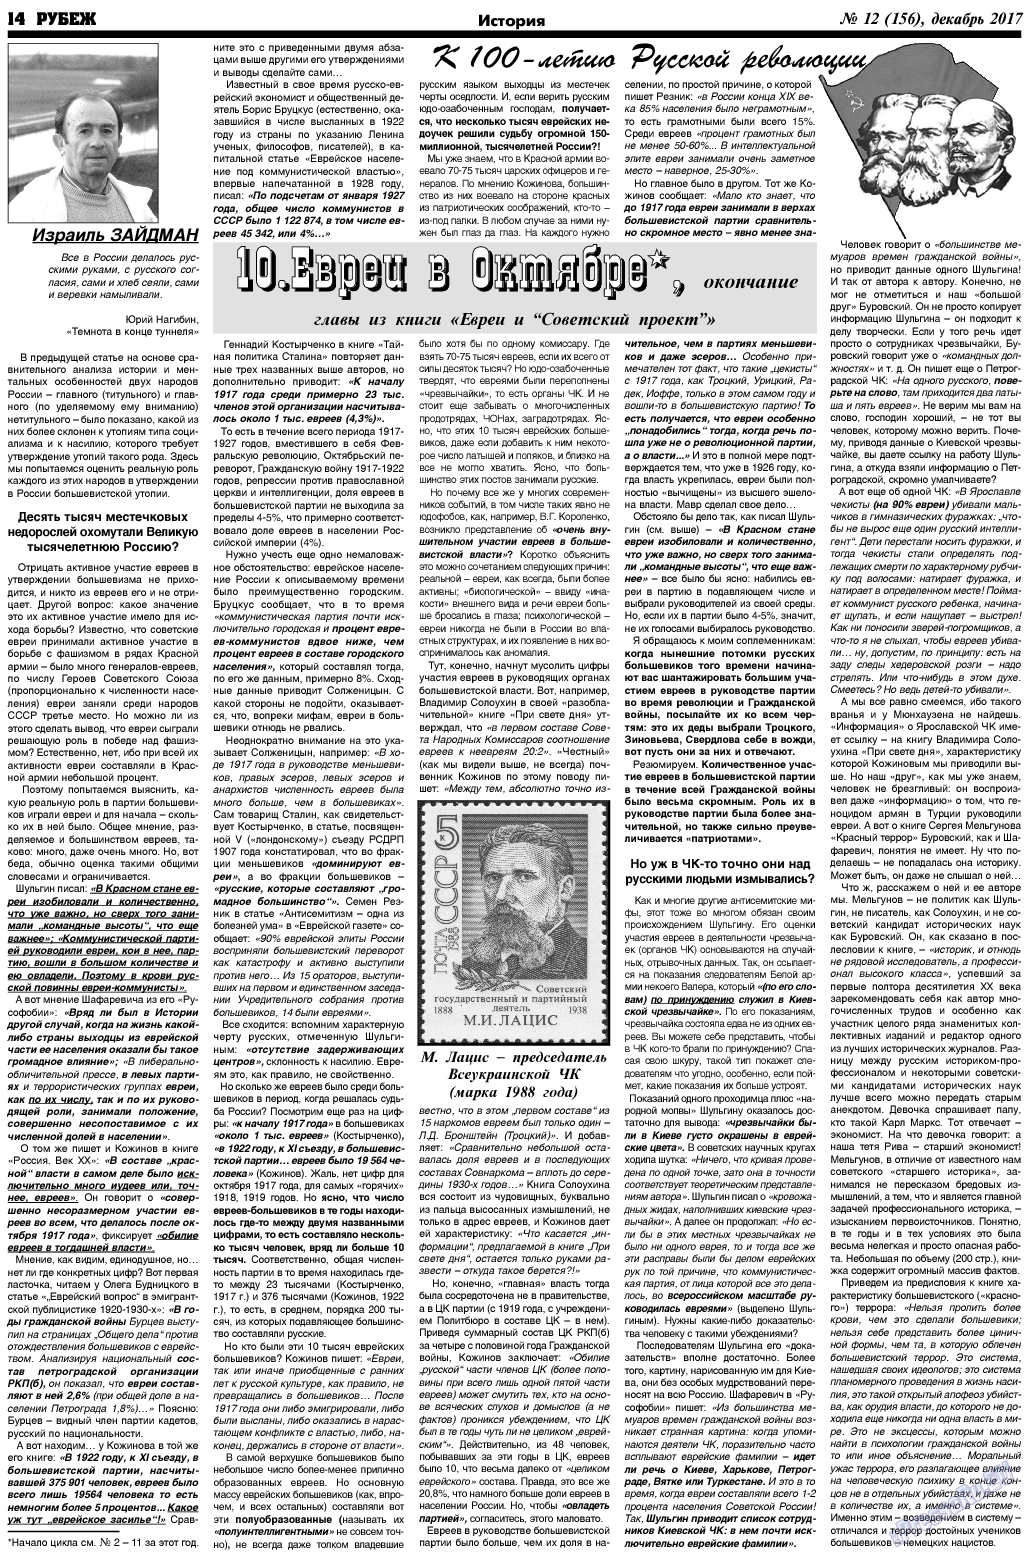 Рубеж, газета. 2017 №12 стр.14